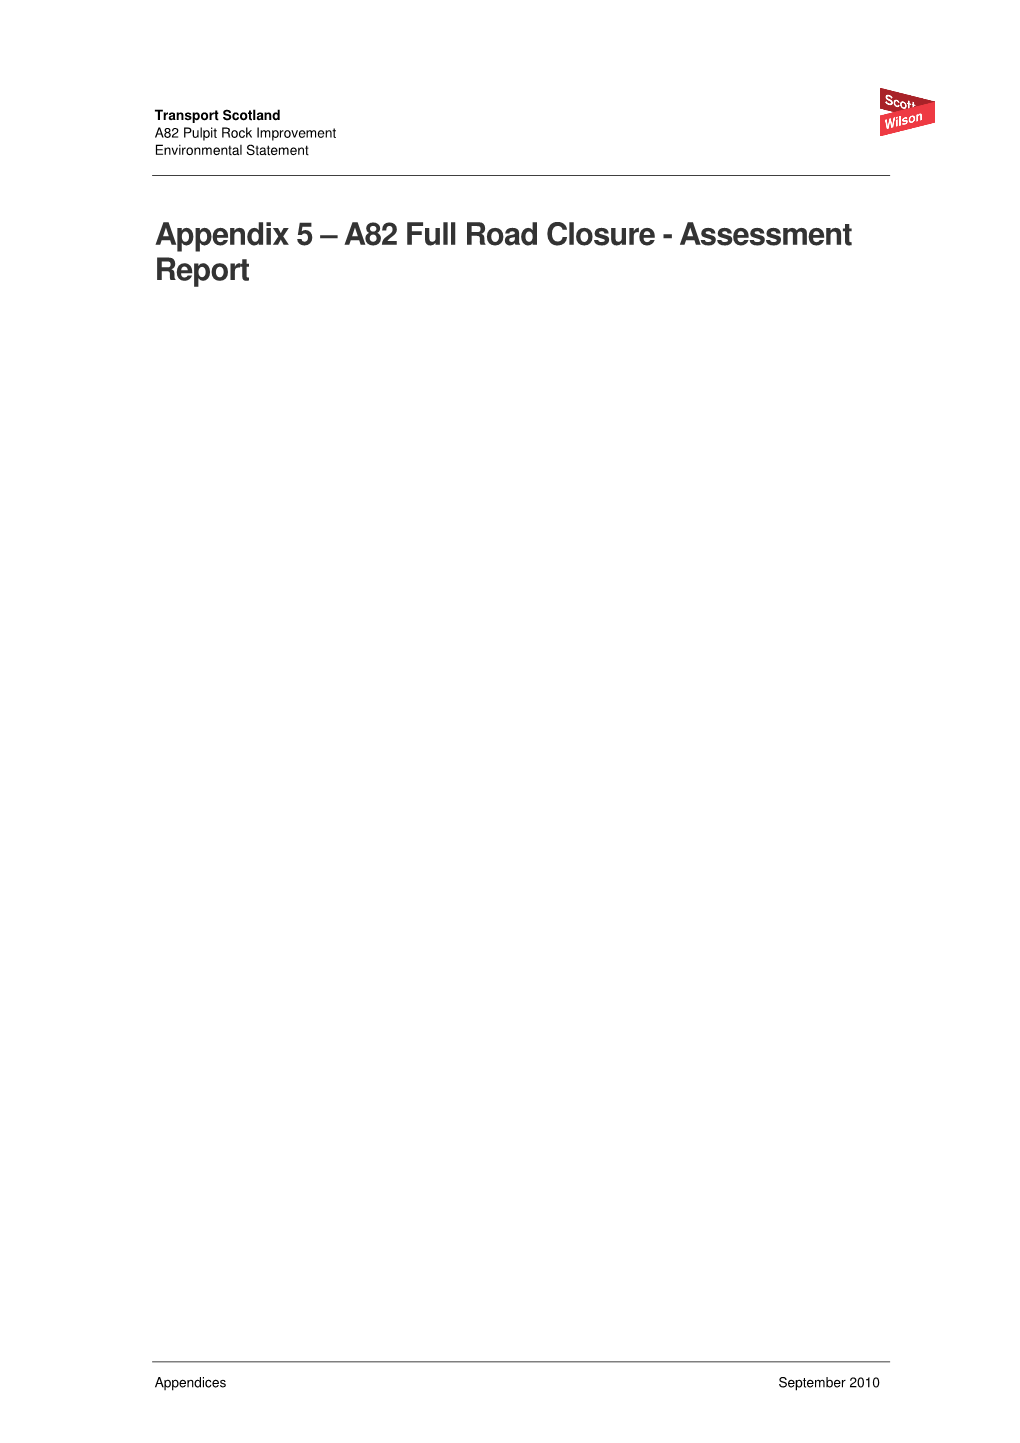 A82 Full Road Closure - Assessment Report